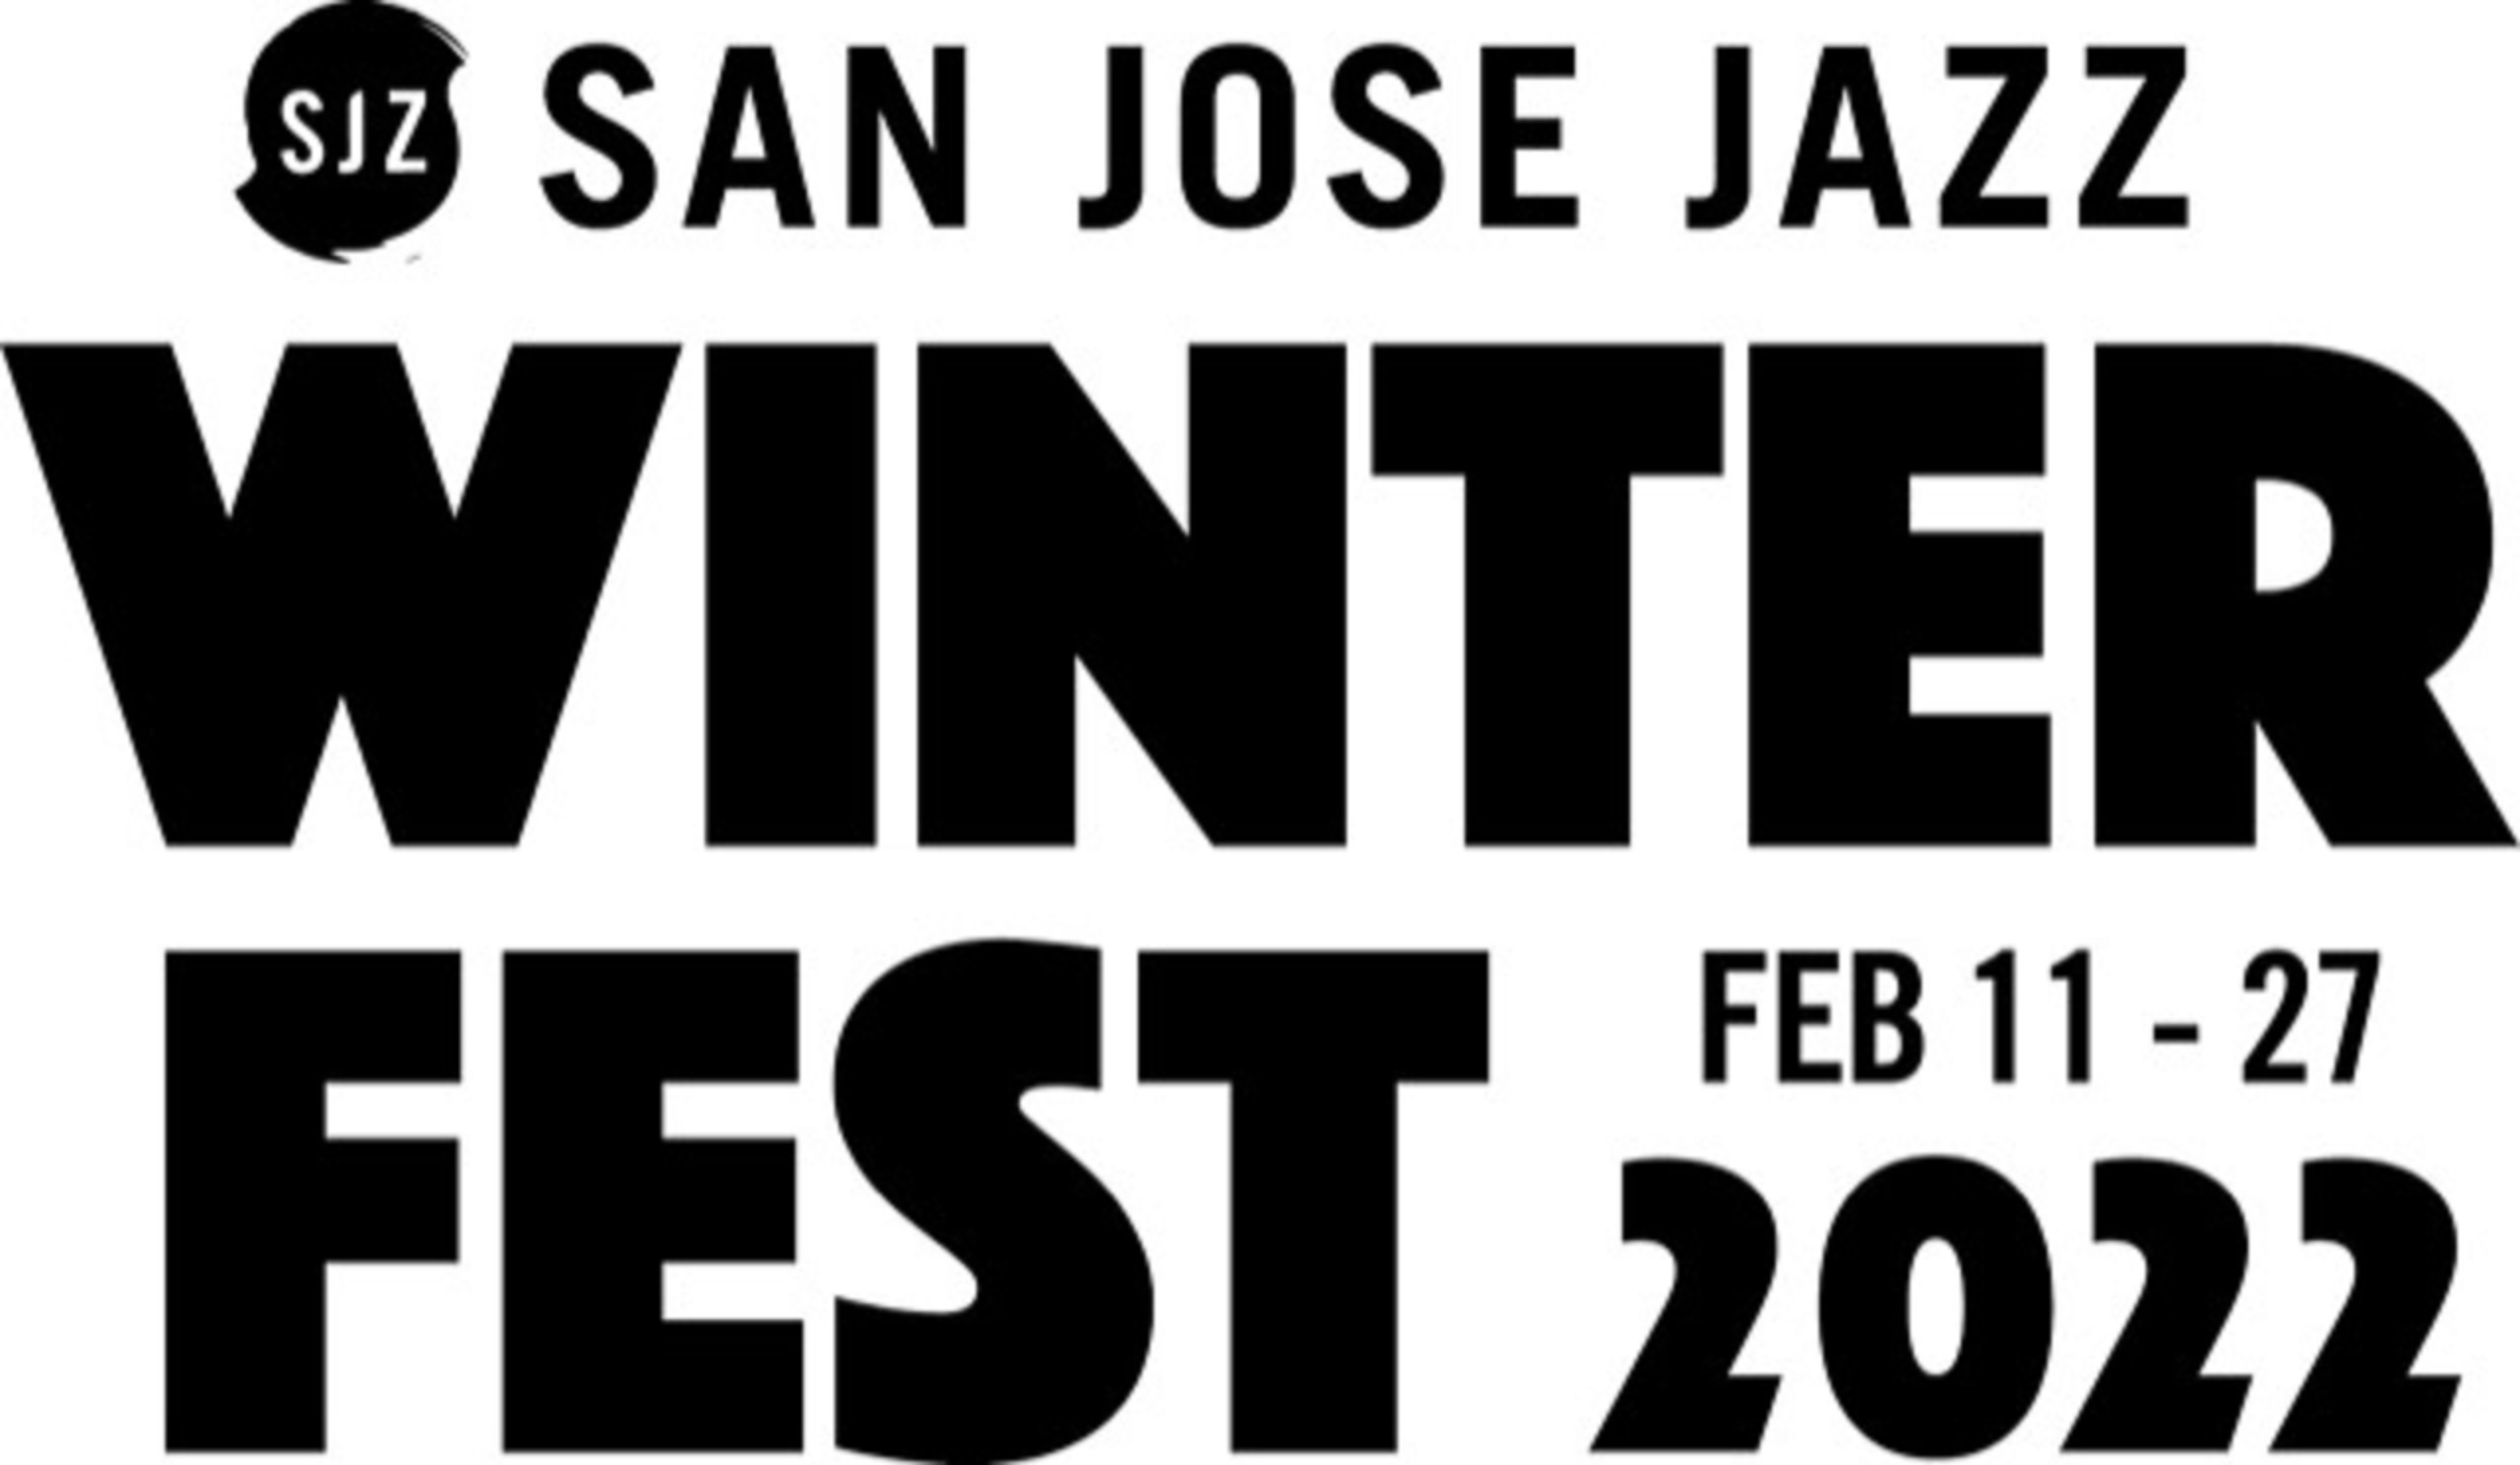 San Jose Jazz Winter Fest Returns Feb. 11 - 27, 2022